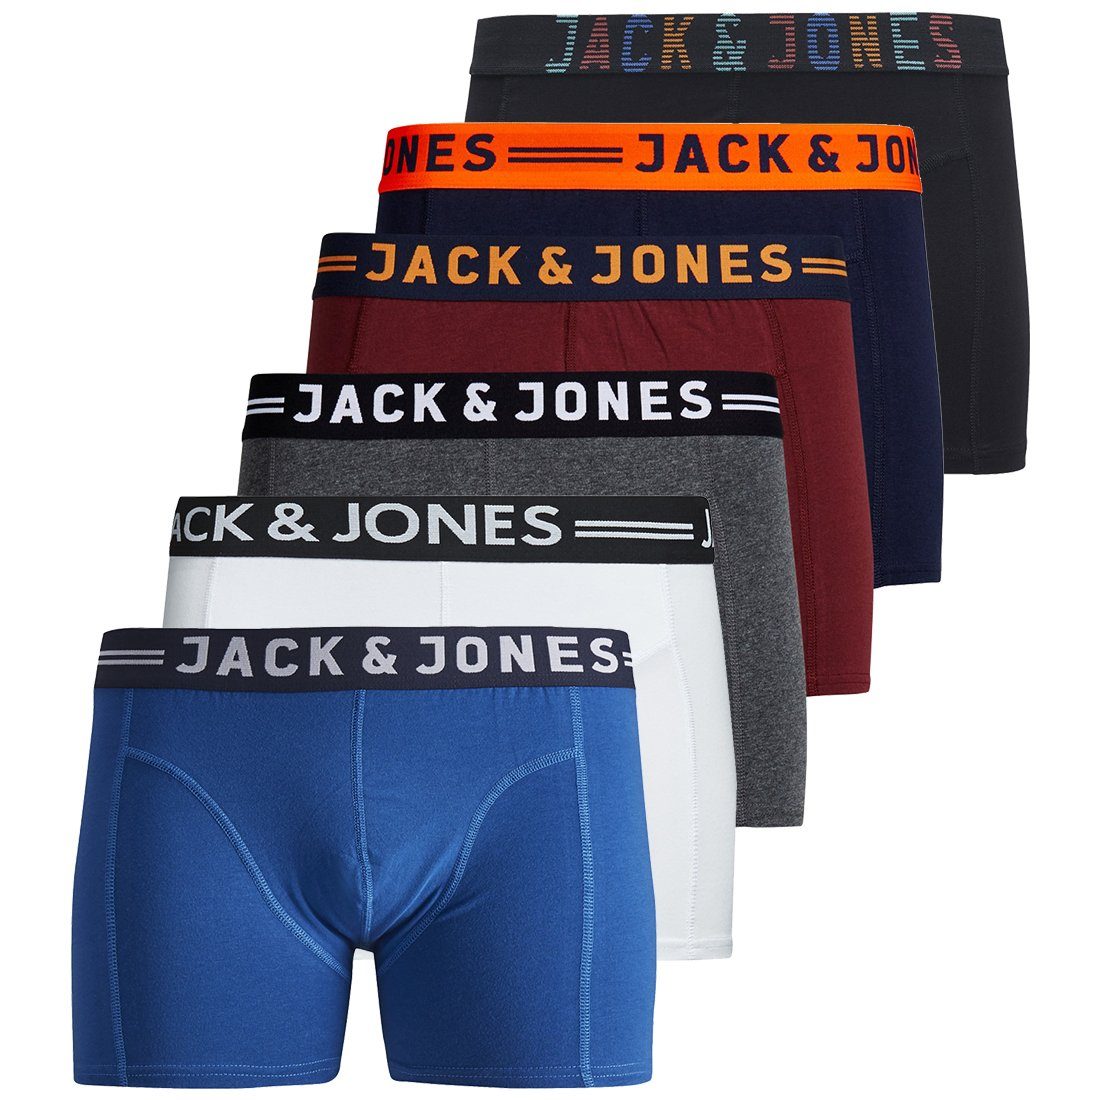 Jack & Jones Boxershorts JACK JONES Boxershorts 6er Pack Herren Männer Short Unterhose Marke S M L XL XXL Mehrfarbig4